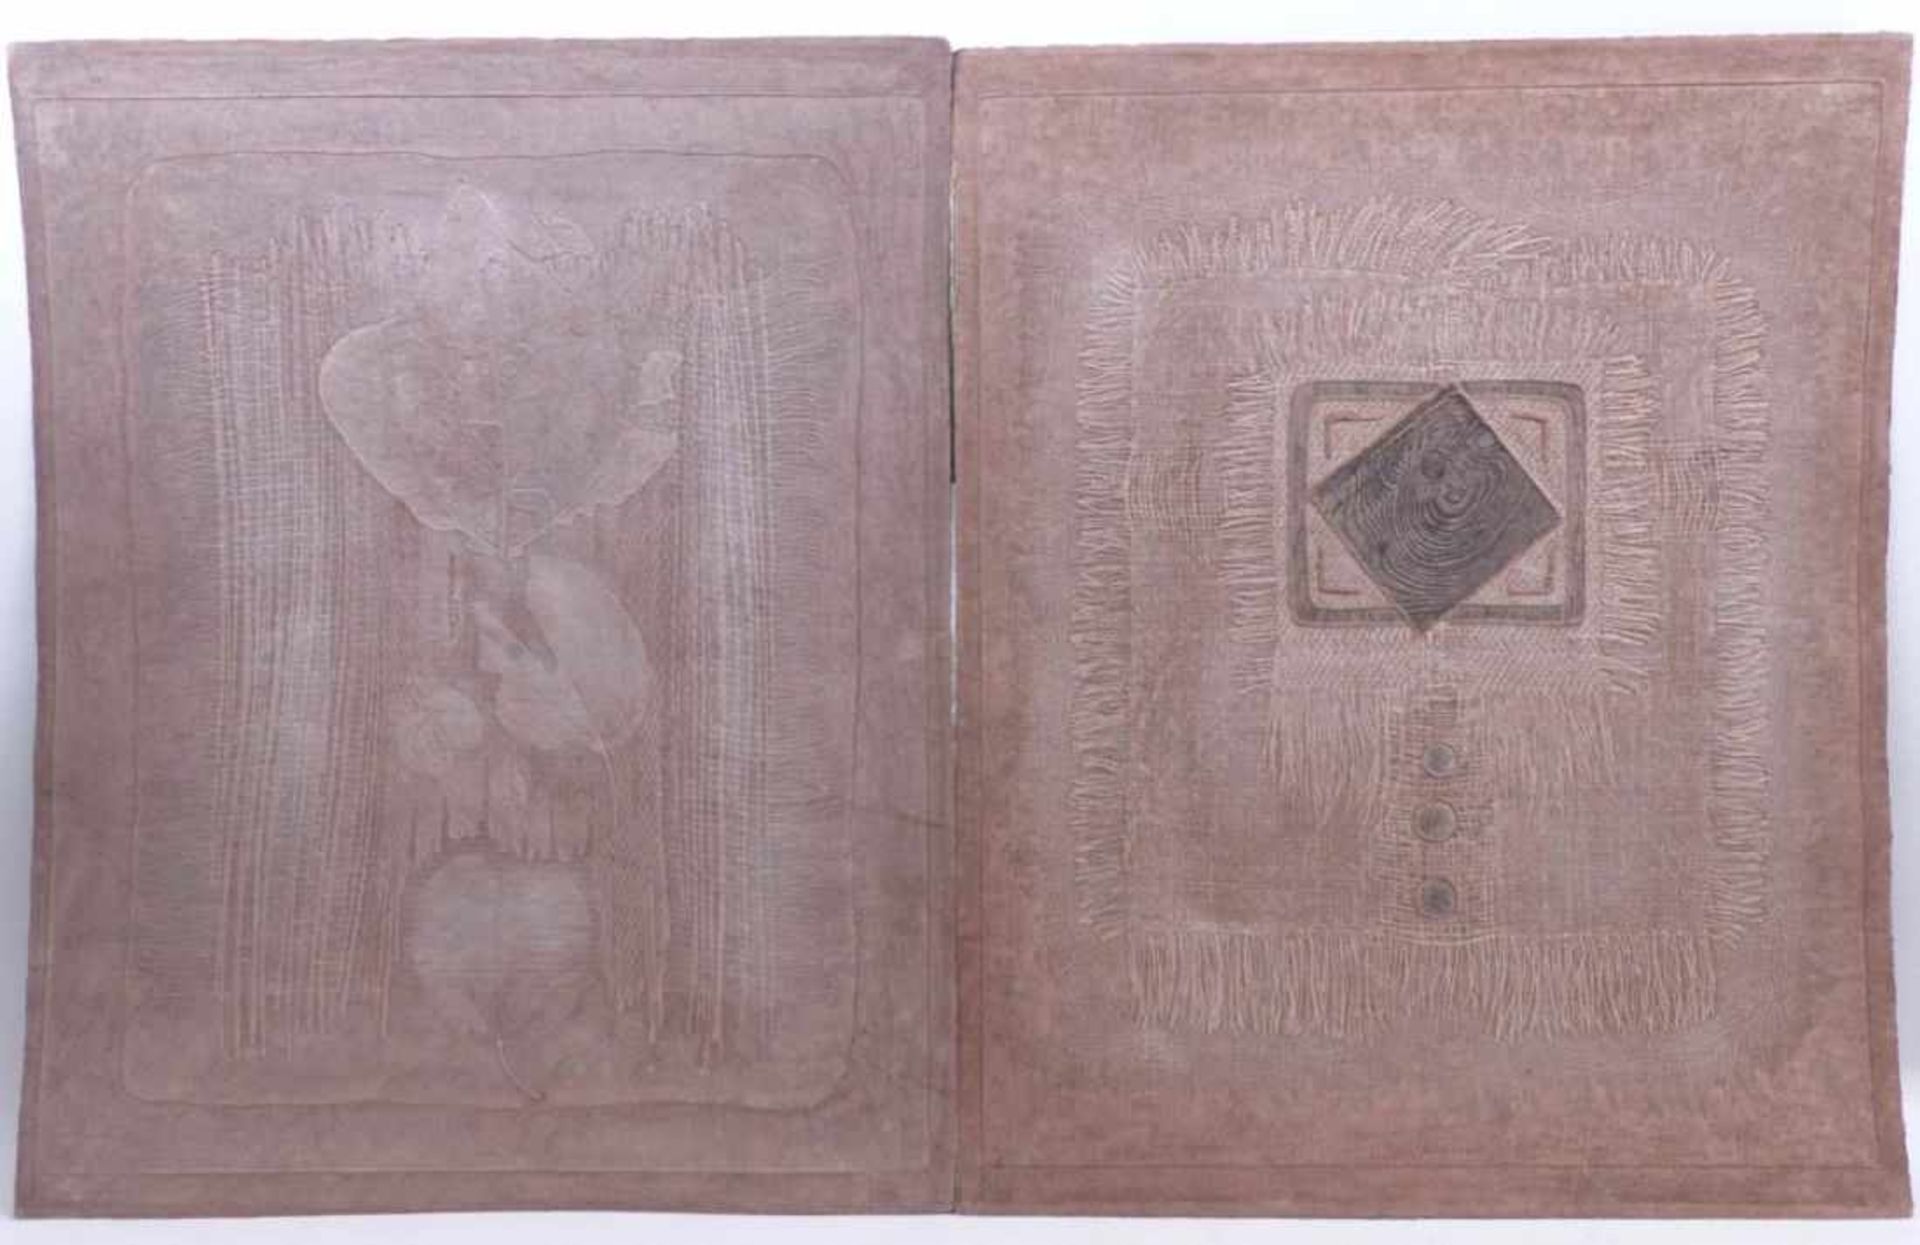 Zwei PrägedruckeJapan, 20. Jh.Textilien imitierend. Prägedruck auf braunem Papier. Rechts unten